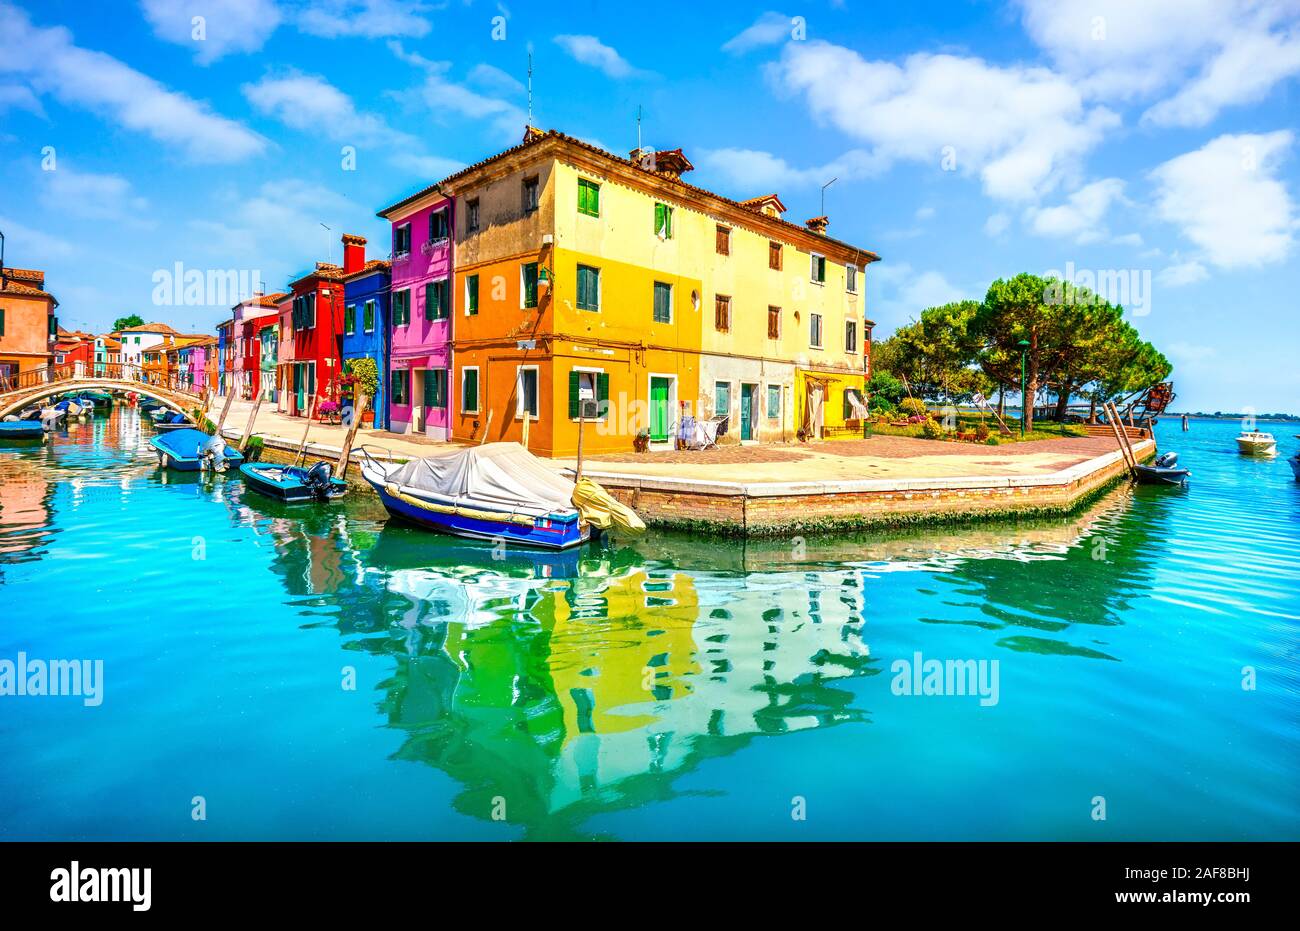 Venice landmark, Burano island canal, colorful houses and boats, Italy, Europe. Stock Photo